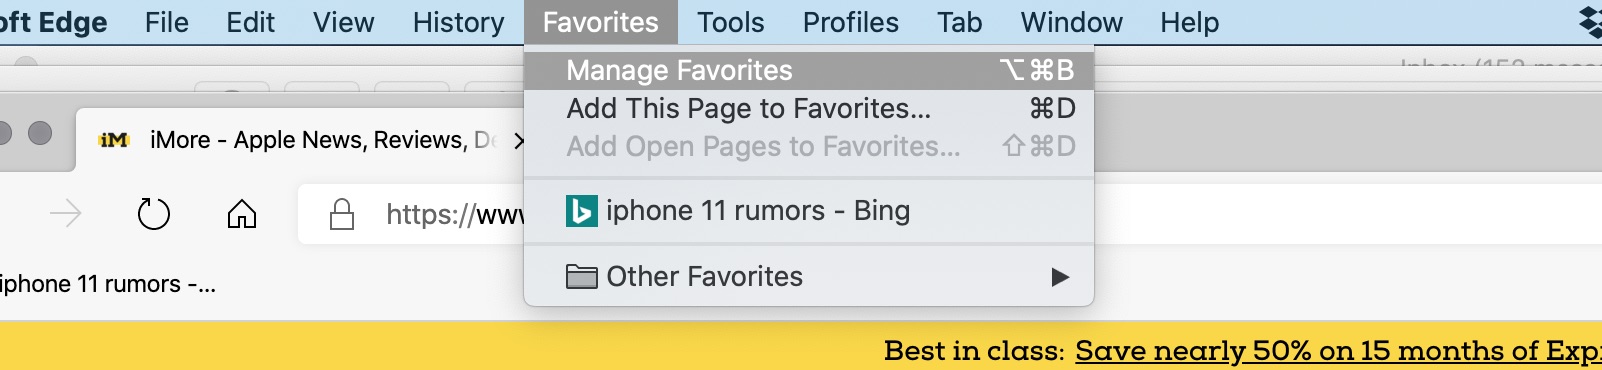 Microsoft Edge manage favorites